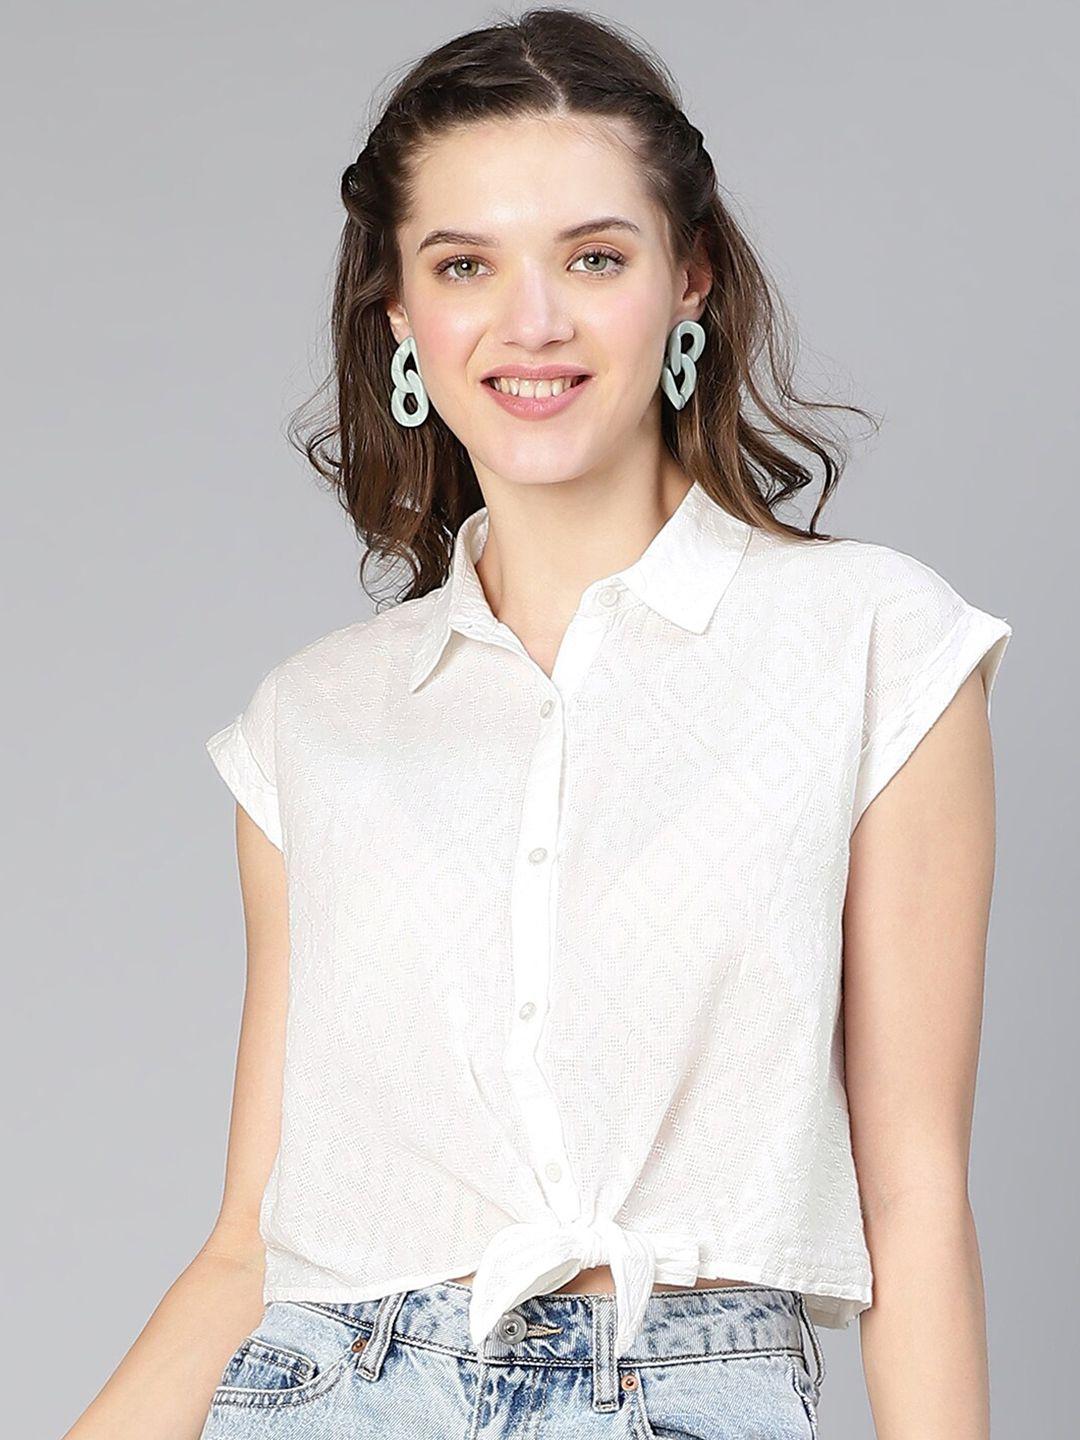 oxolloxo-ethnic-motifs-printed-cotton-boxy-shirt-style-top